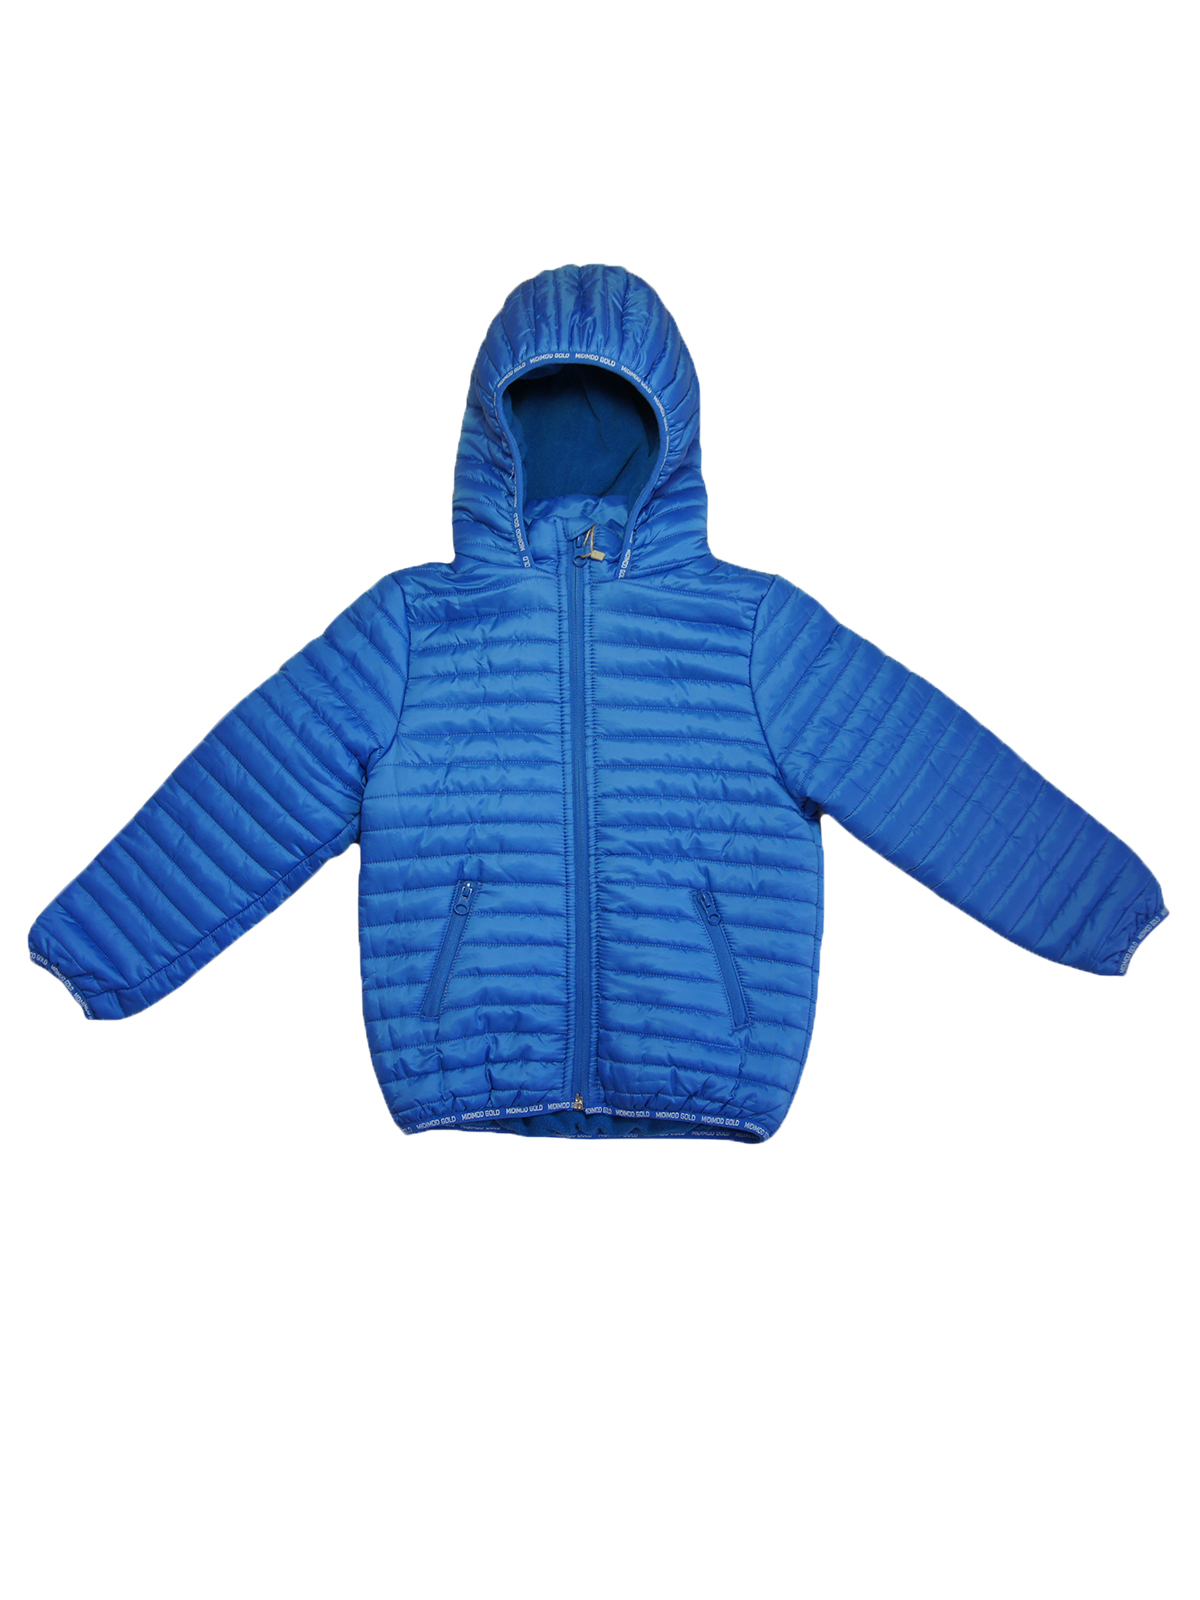 Куртка детская MDM MIDIMOD GOLD М20849, синий, 116